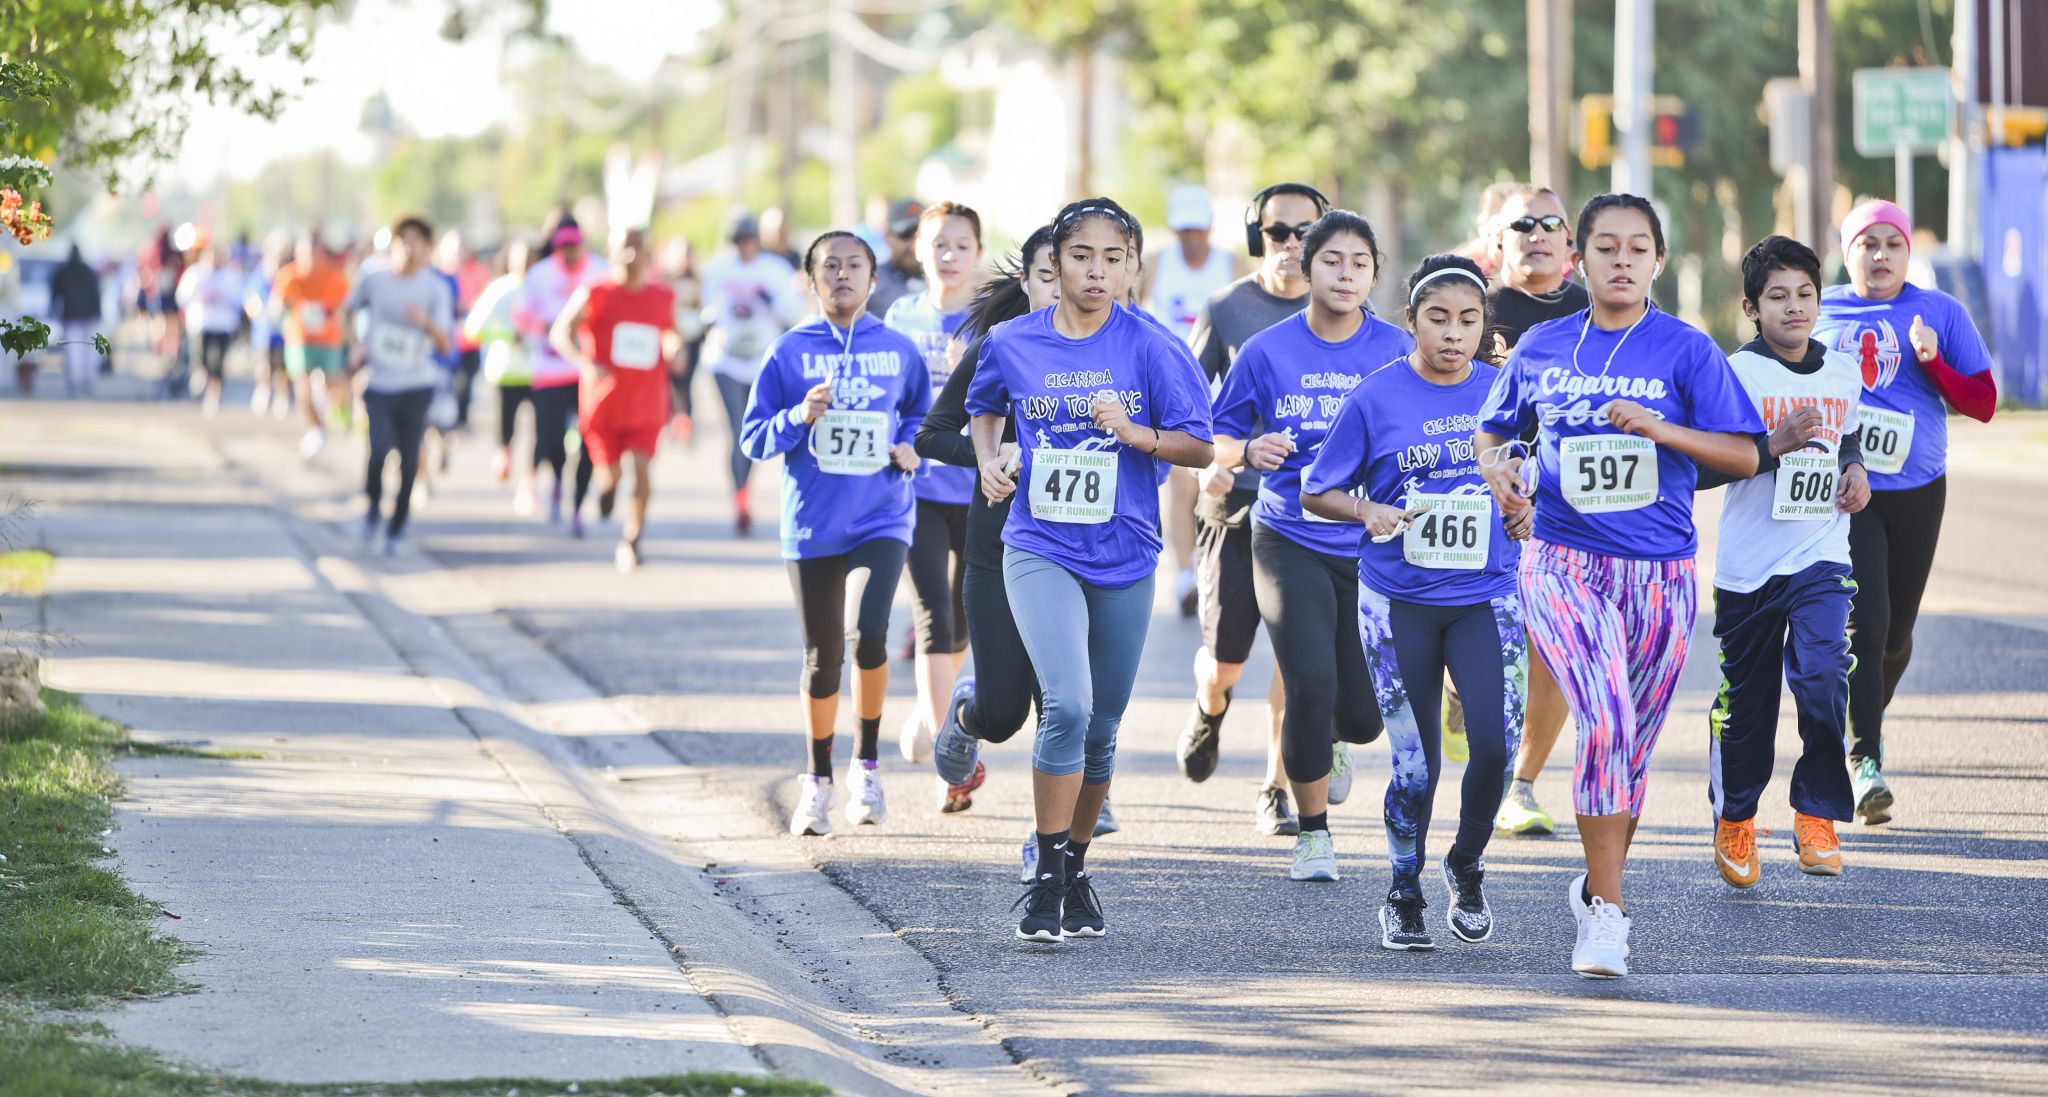 City of Laredo announces downtown city marathon in November